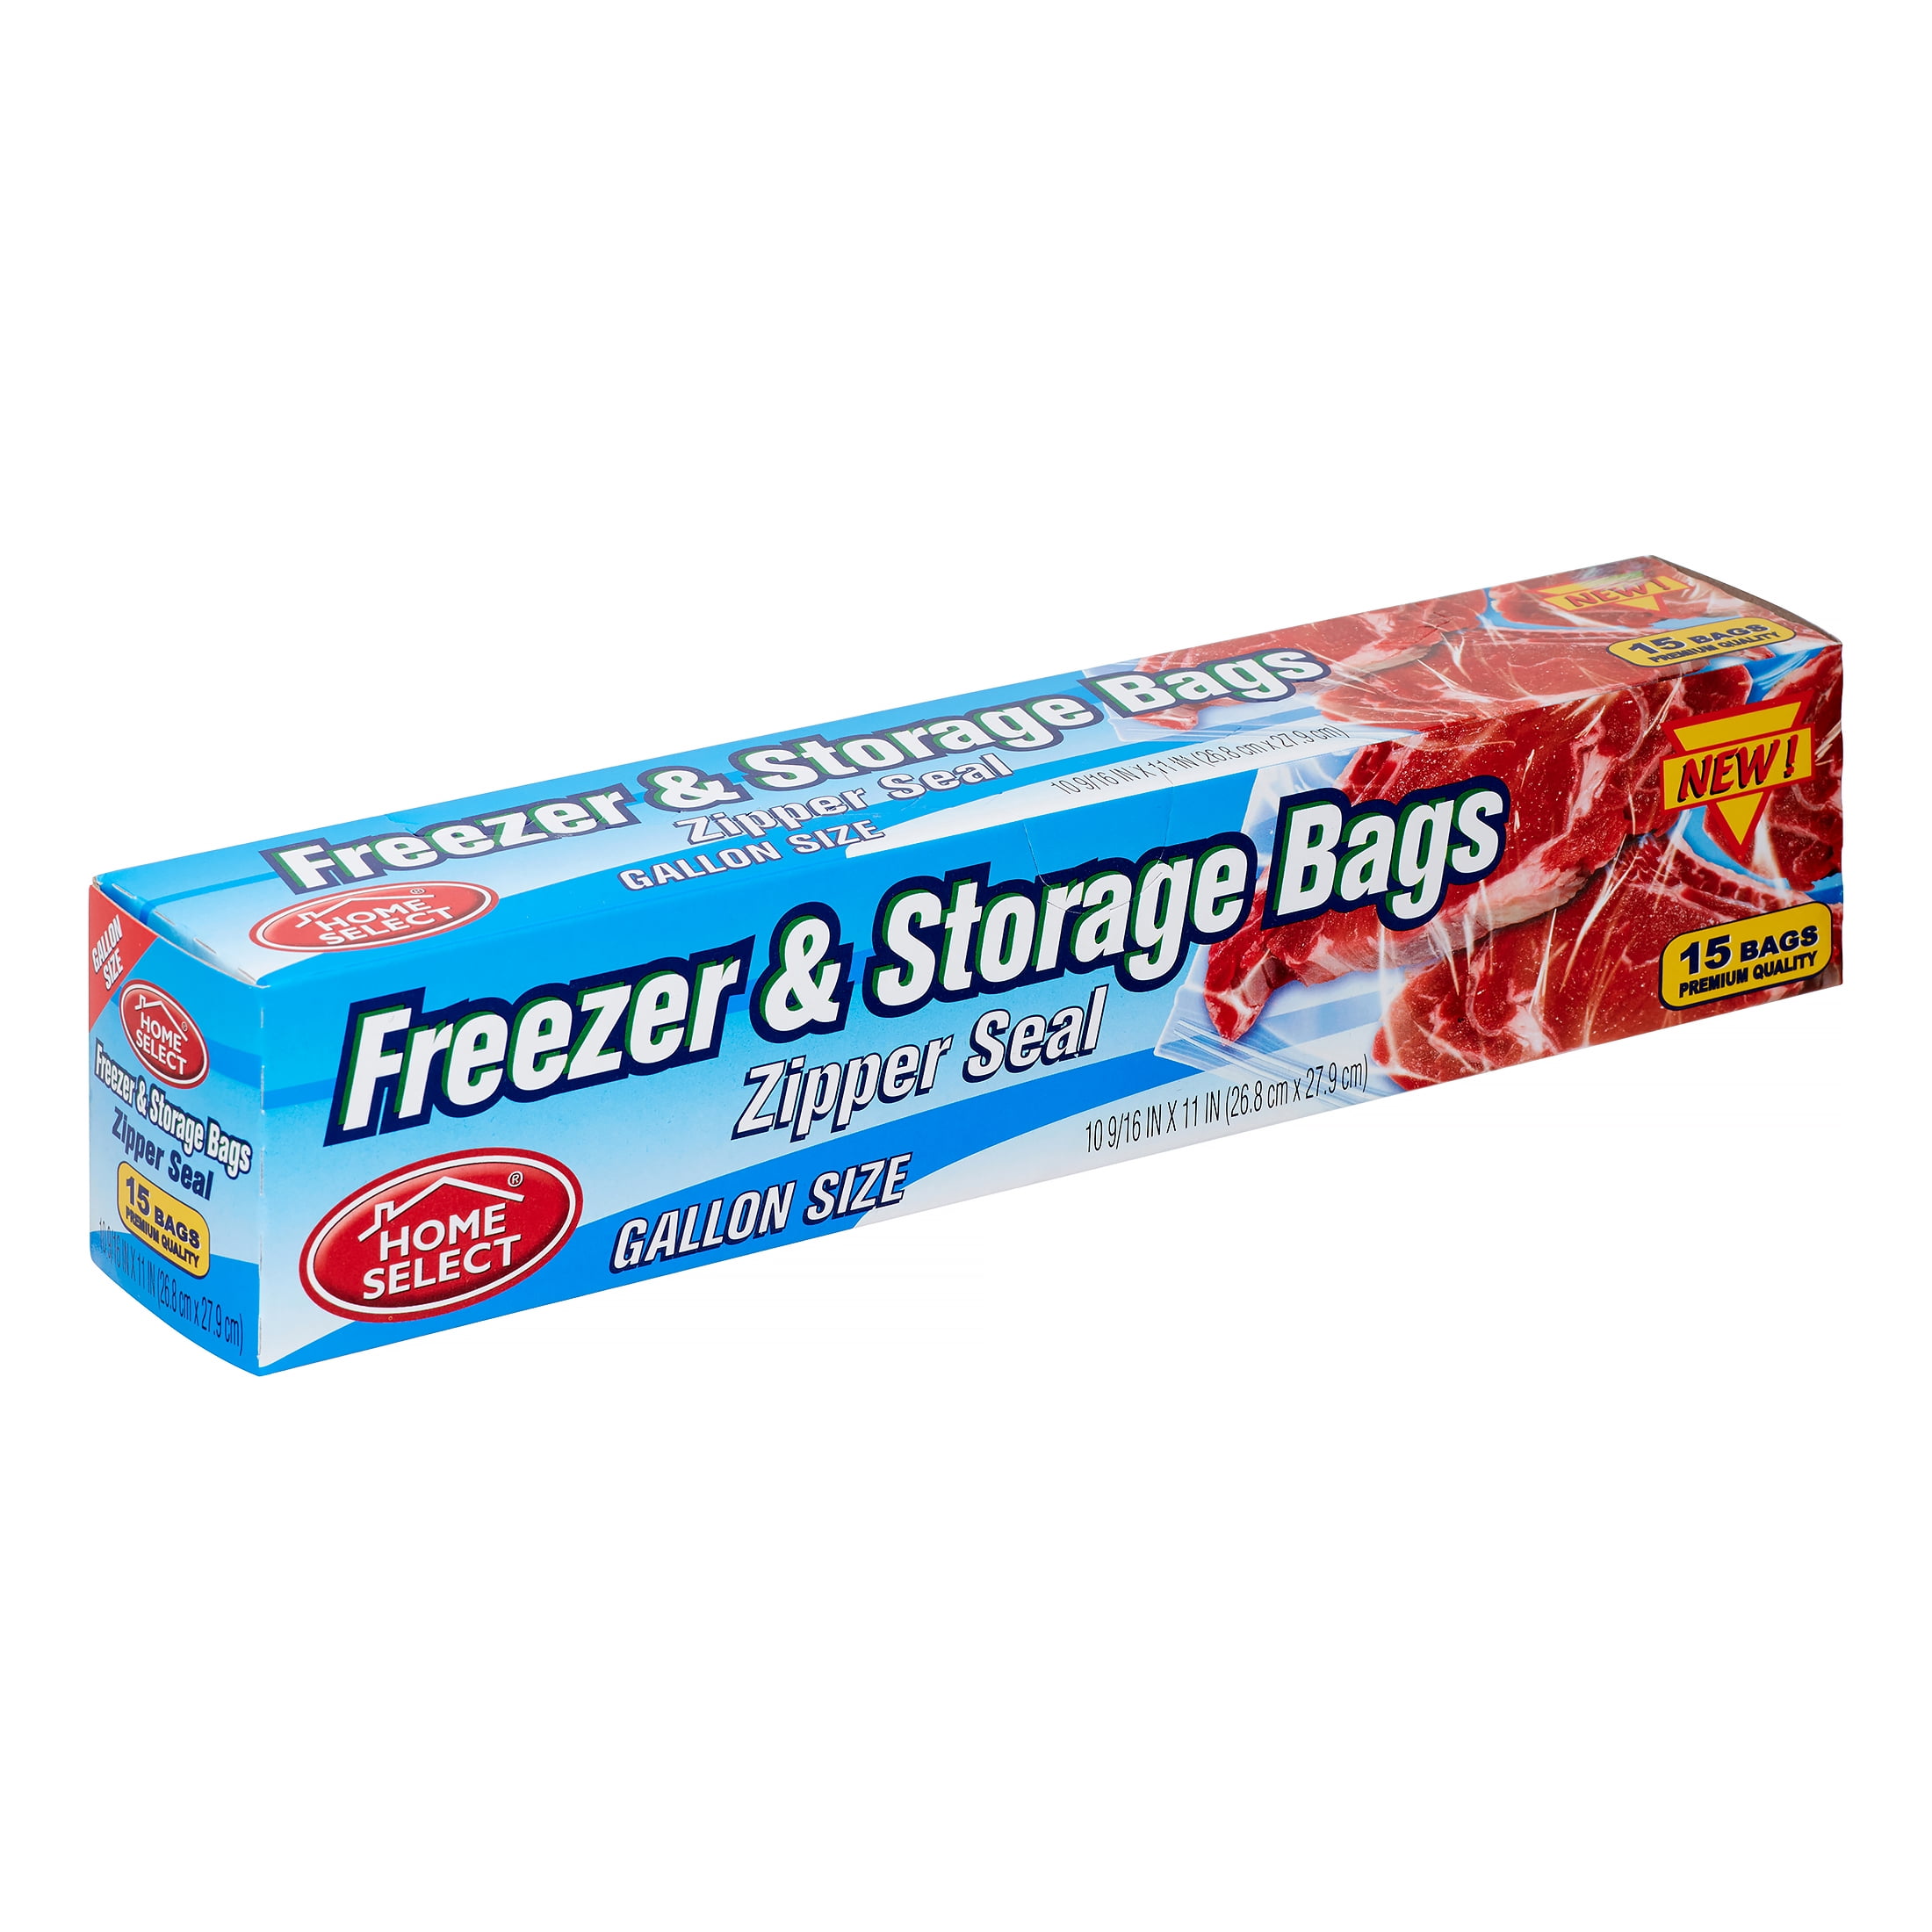 Home Select Zipper Seal Freezer & Storage Bags Quart Size (25 ct